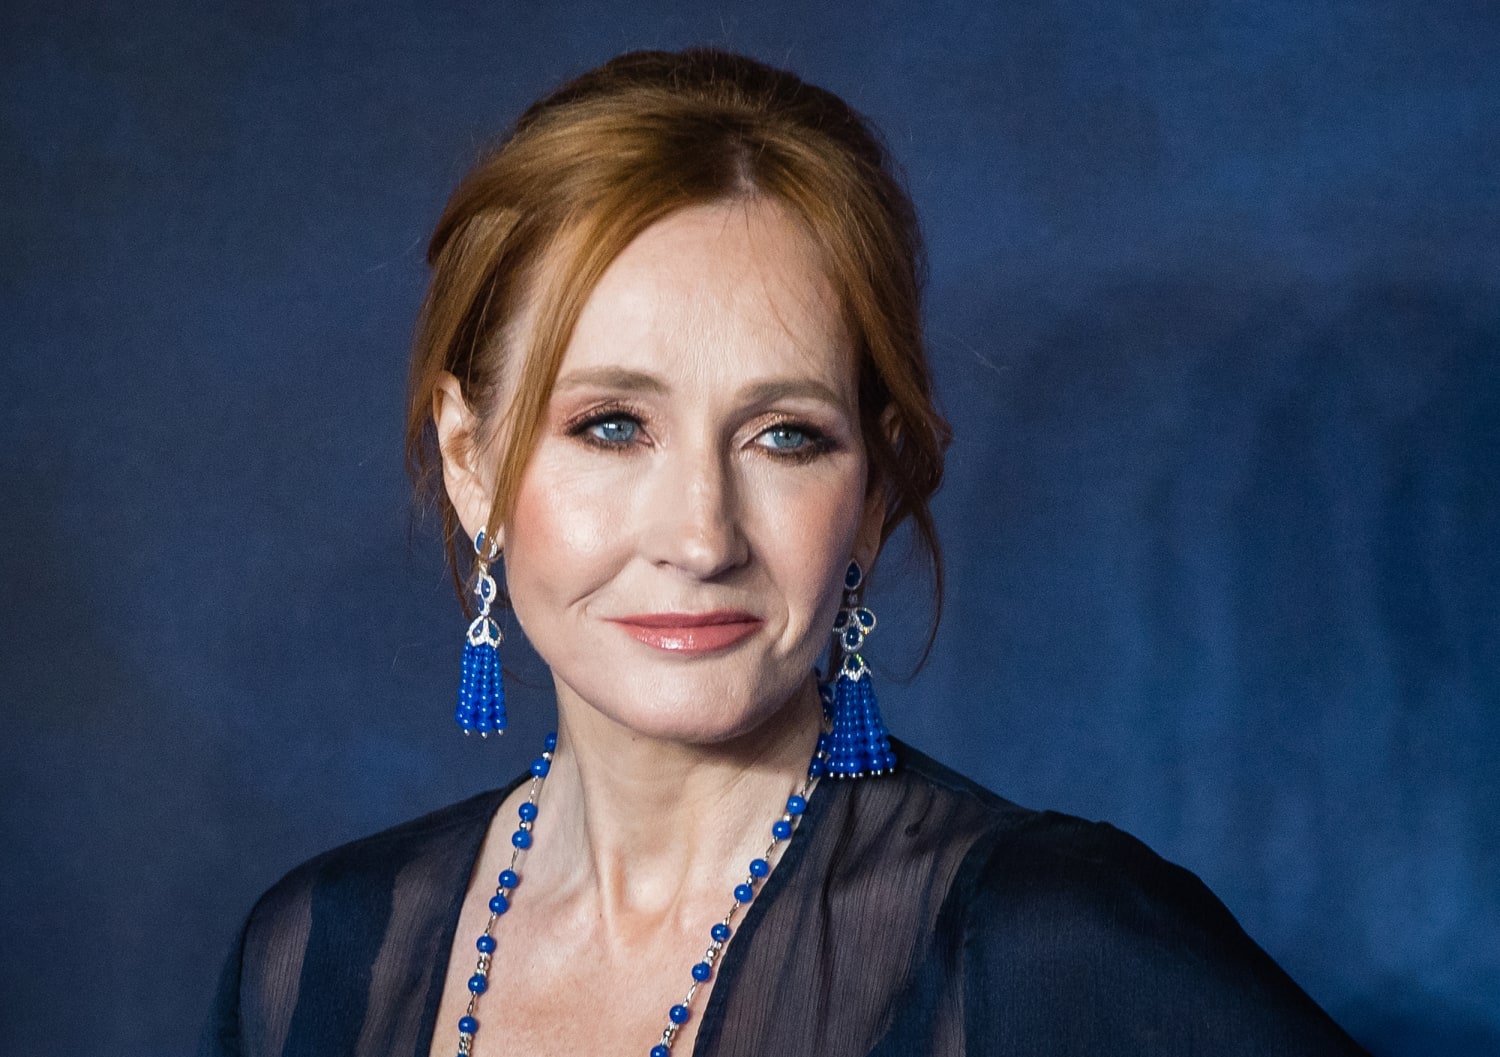 J.K. Rowling faces backlash after tweeting support for 'transphobic'  researcher